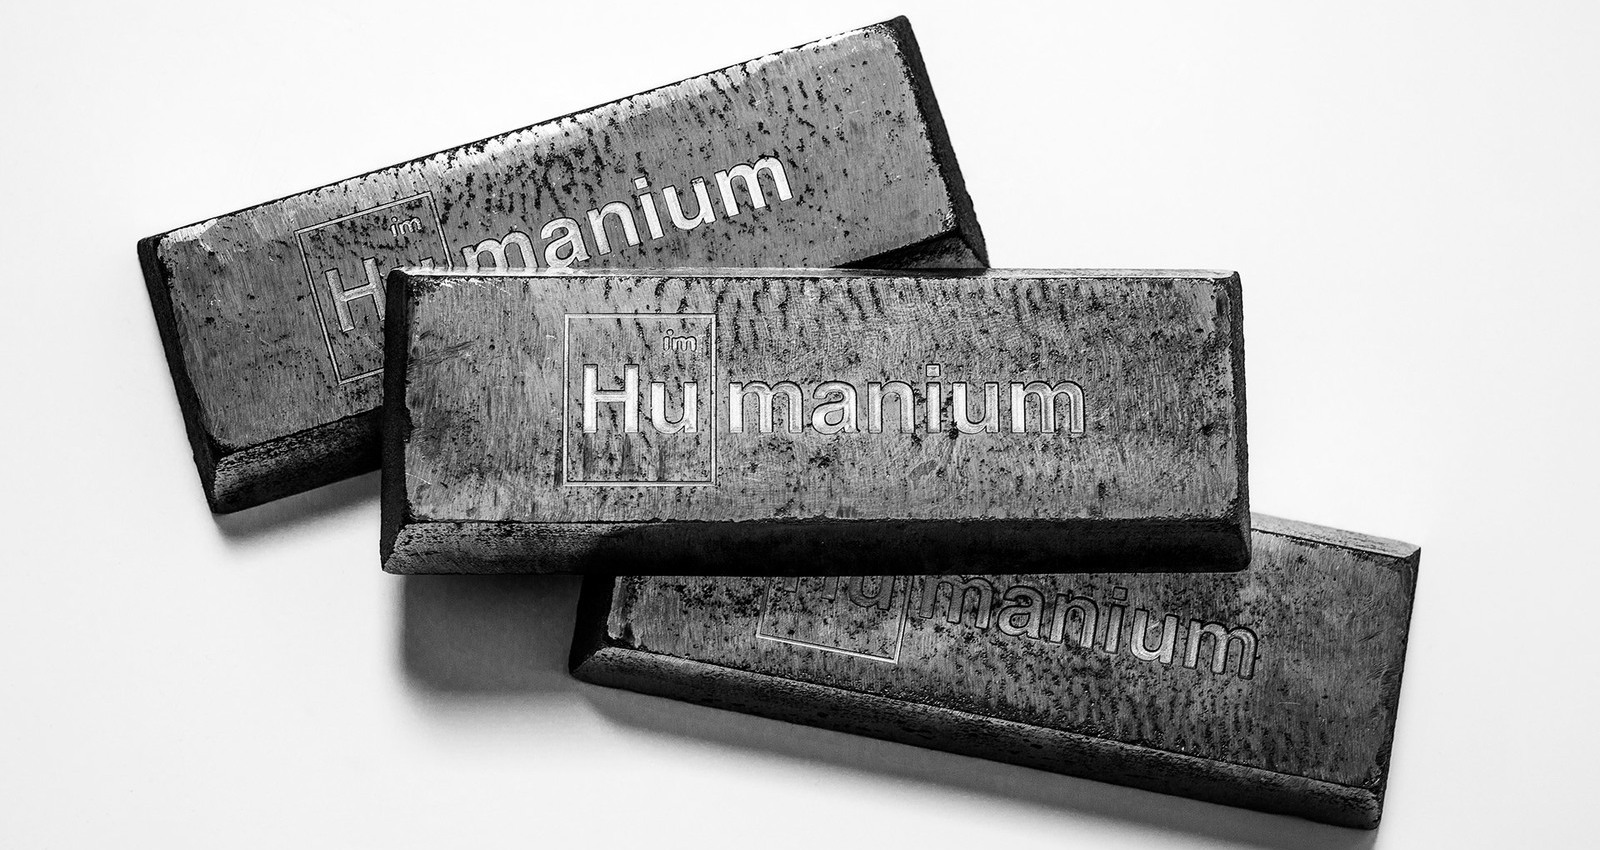 The Humanium Metal Initiative